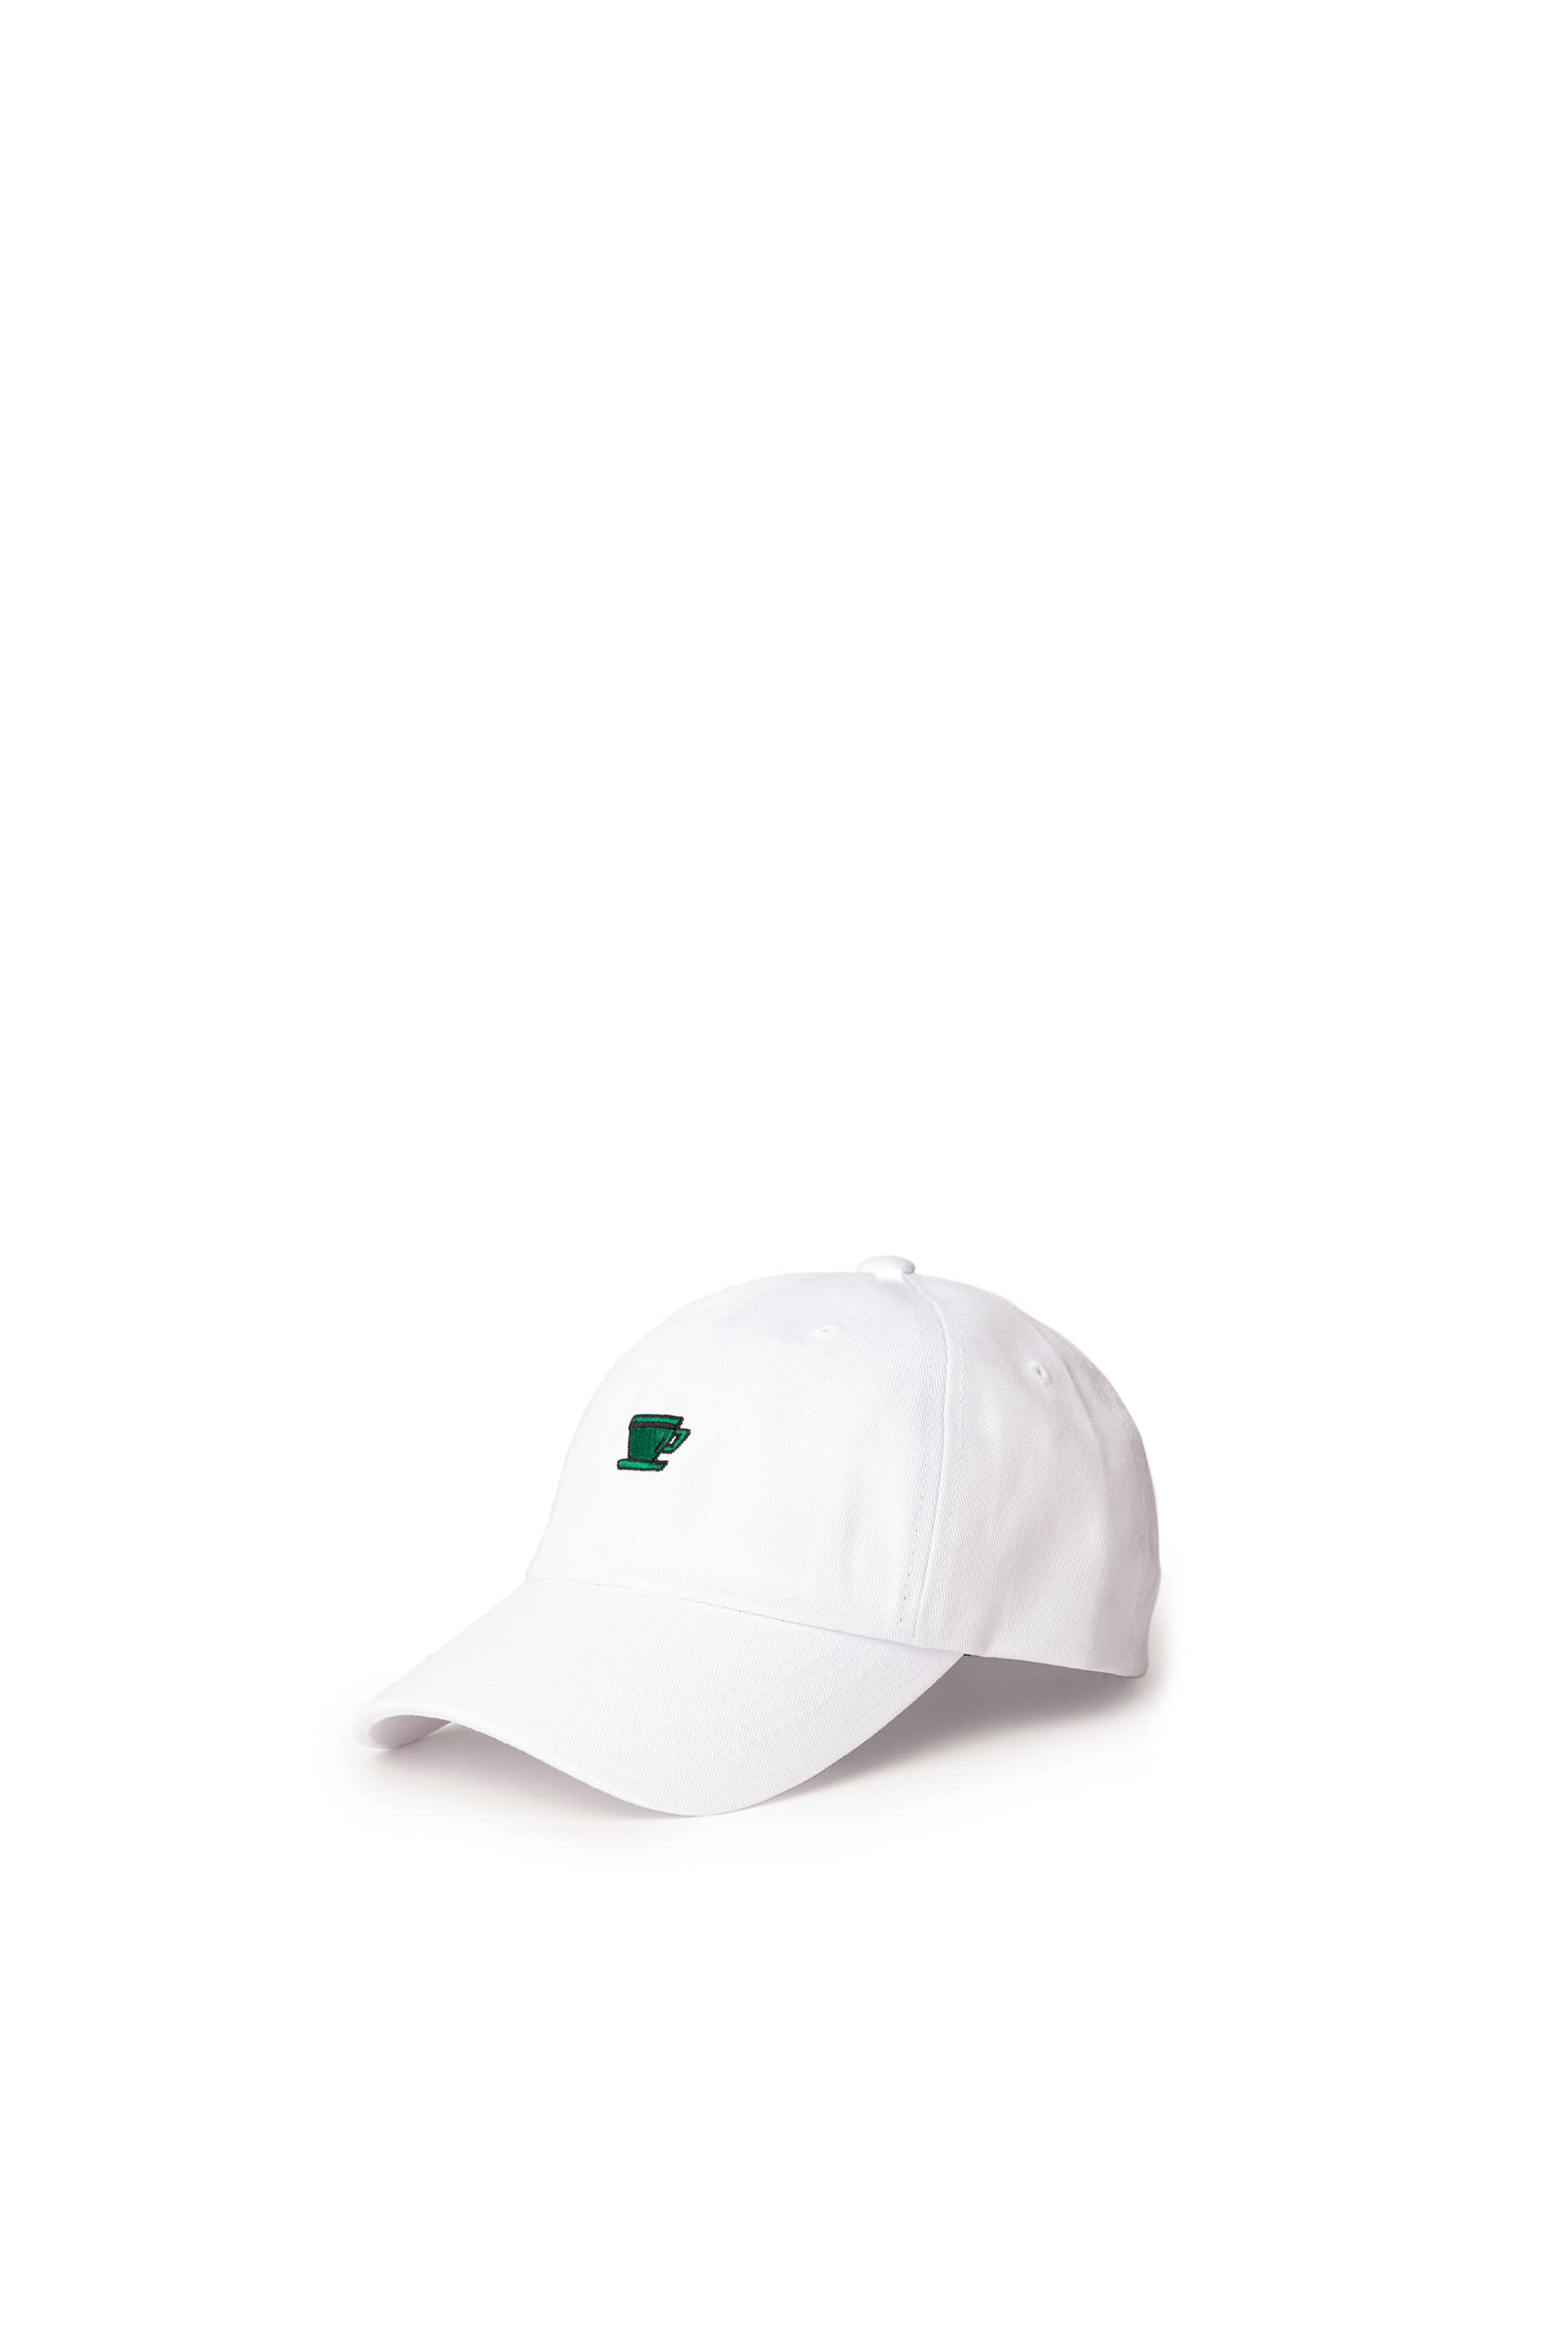 BALL CAP WHITE